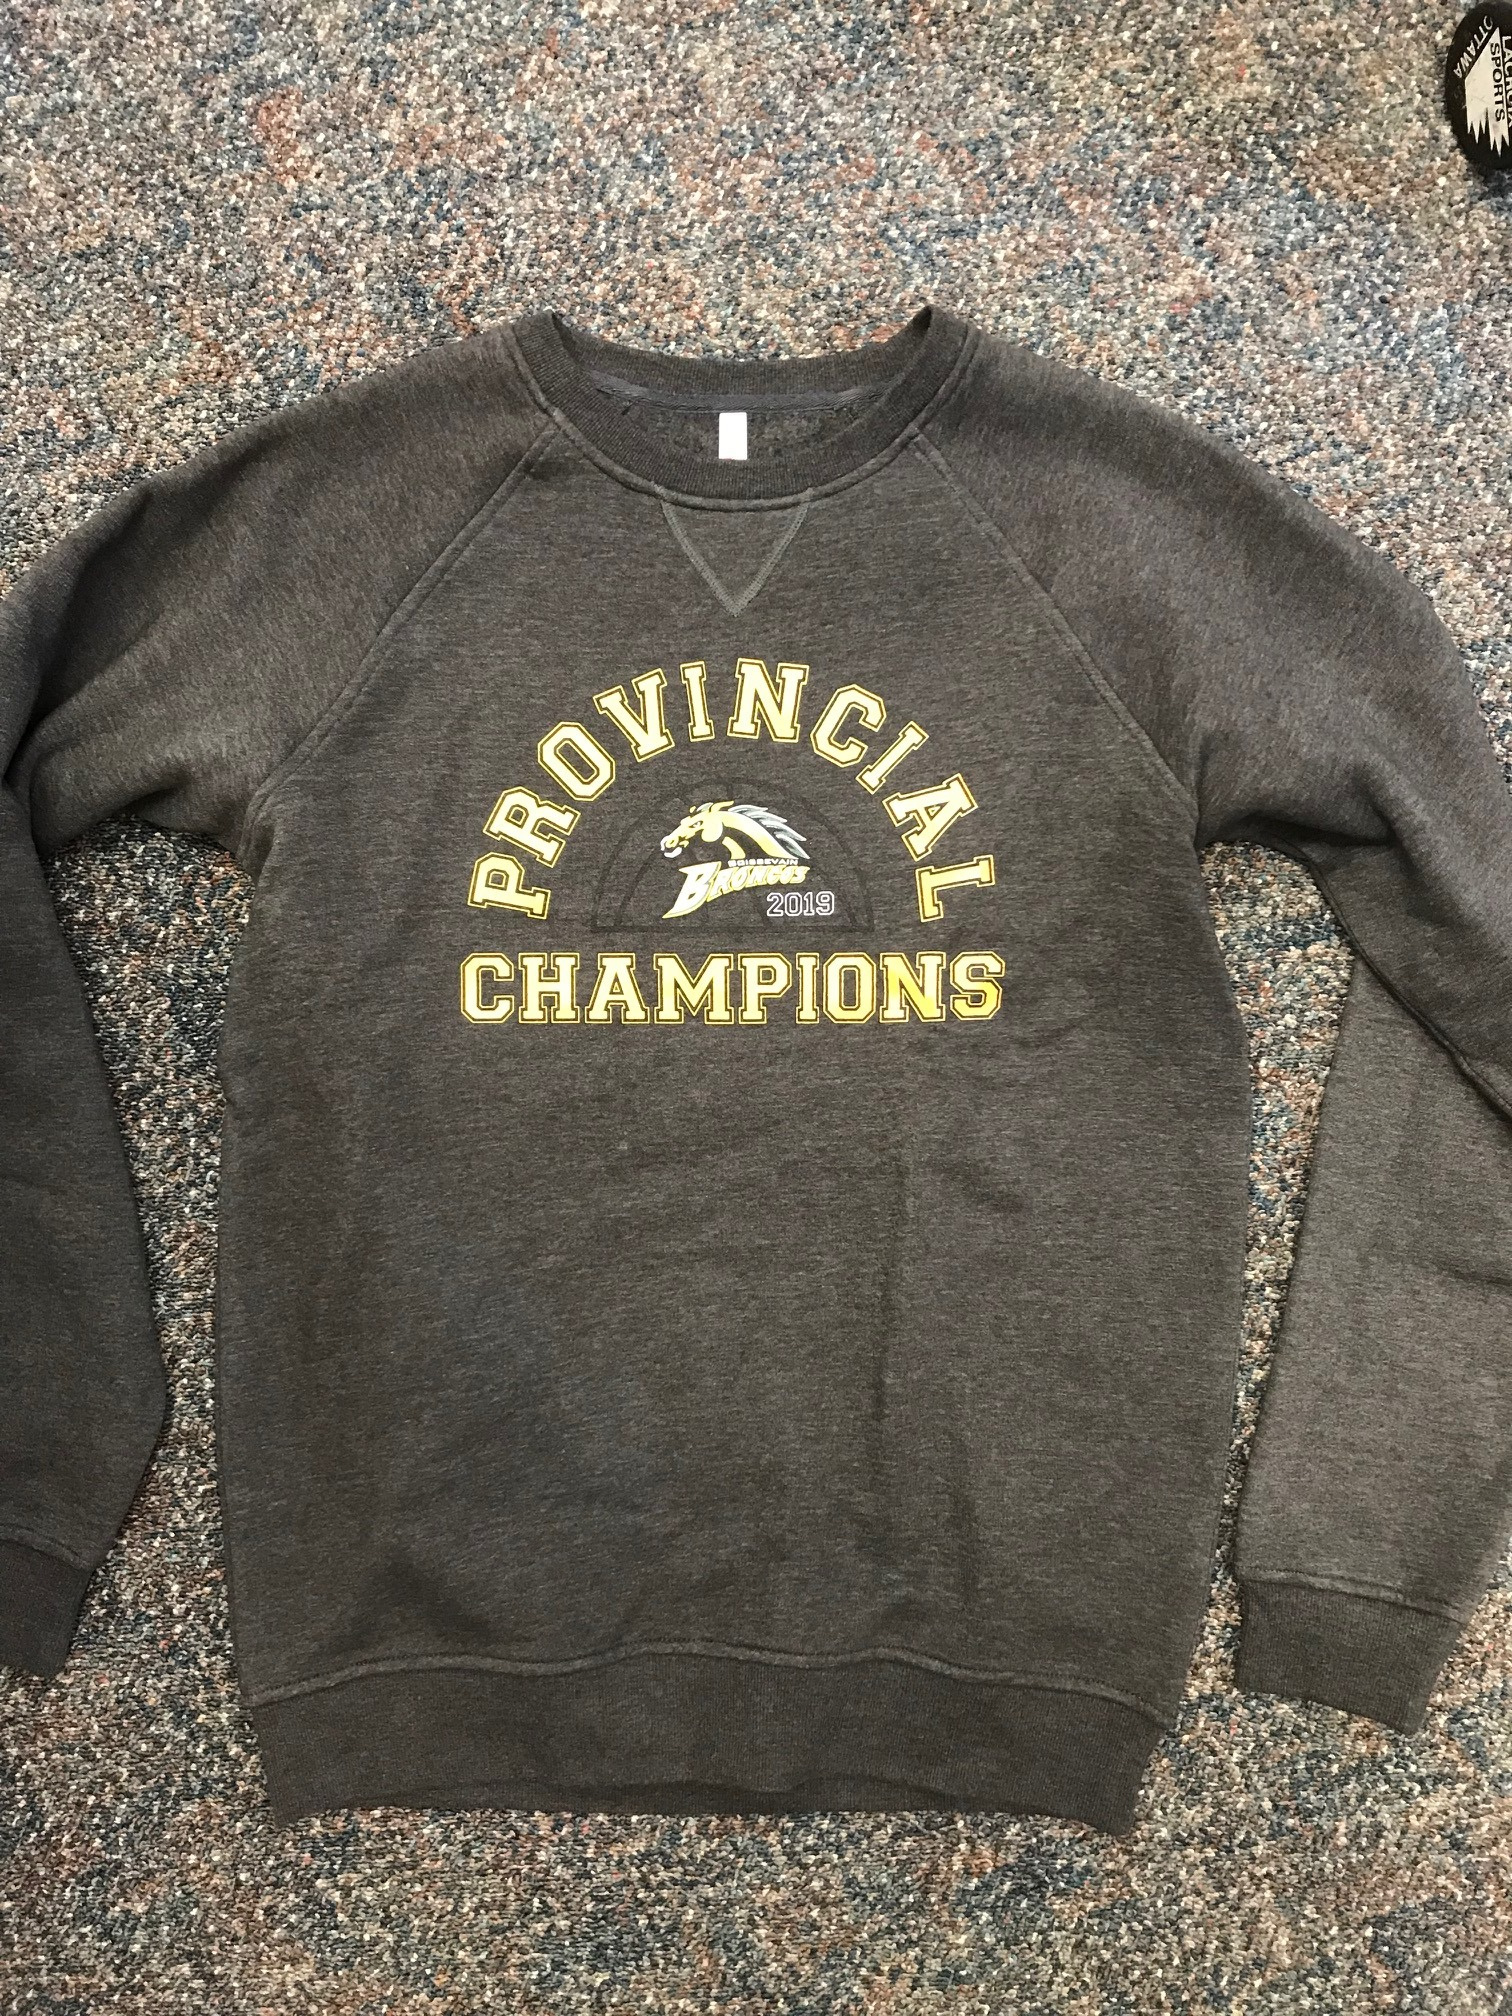 https://0901.nccdn.net/4_2/000/000/03f/ac7/Bronco-Champions-sweat-shirts-1512x2016.jpg